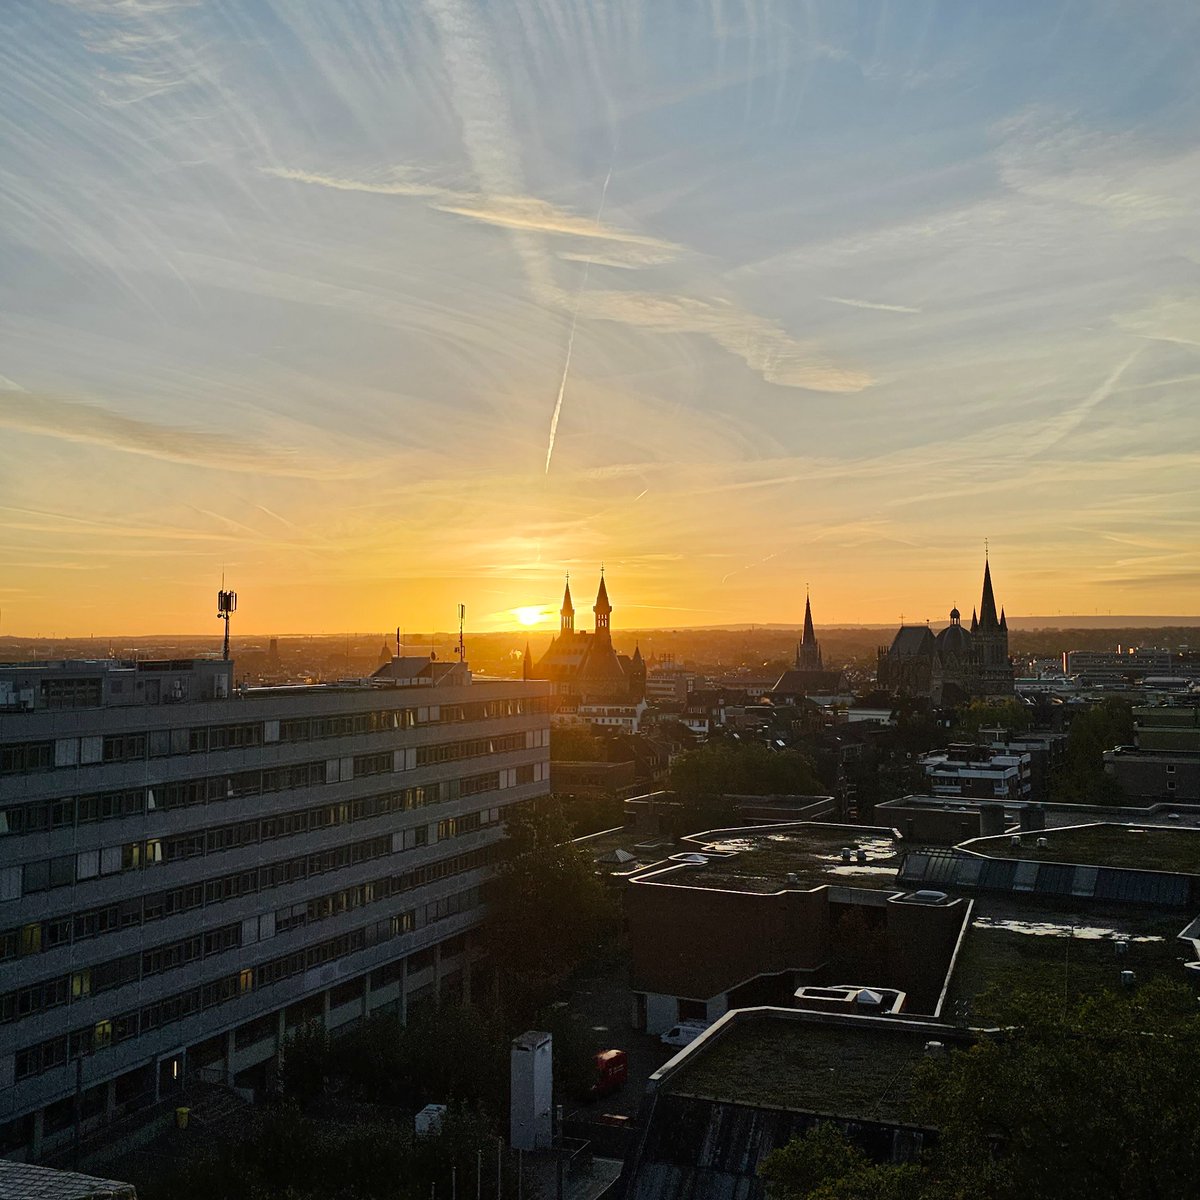 Guten Morgen/Good Morning! ♥️🌅 #rwth #Aachen #Sonnenaufgang #sunrise #goodmorning